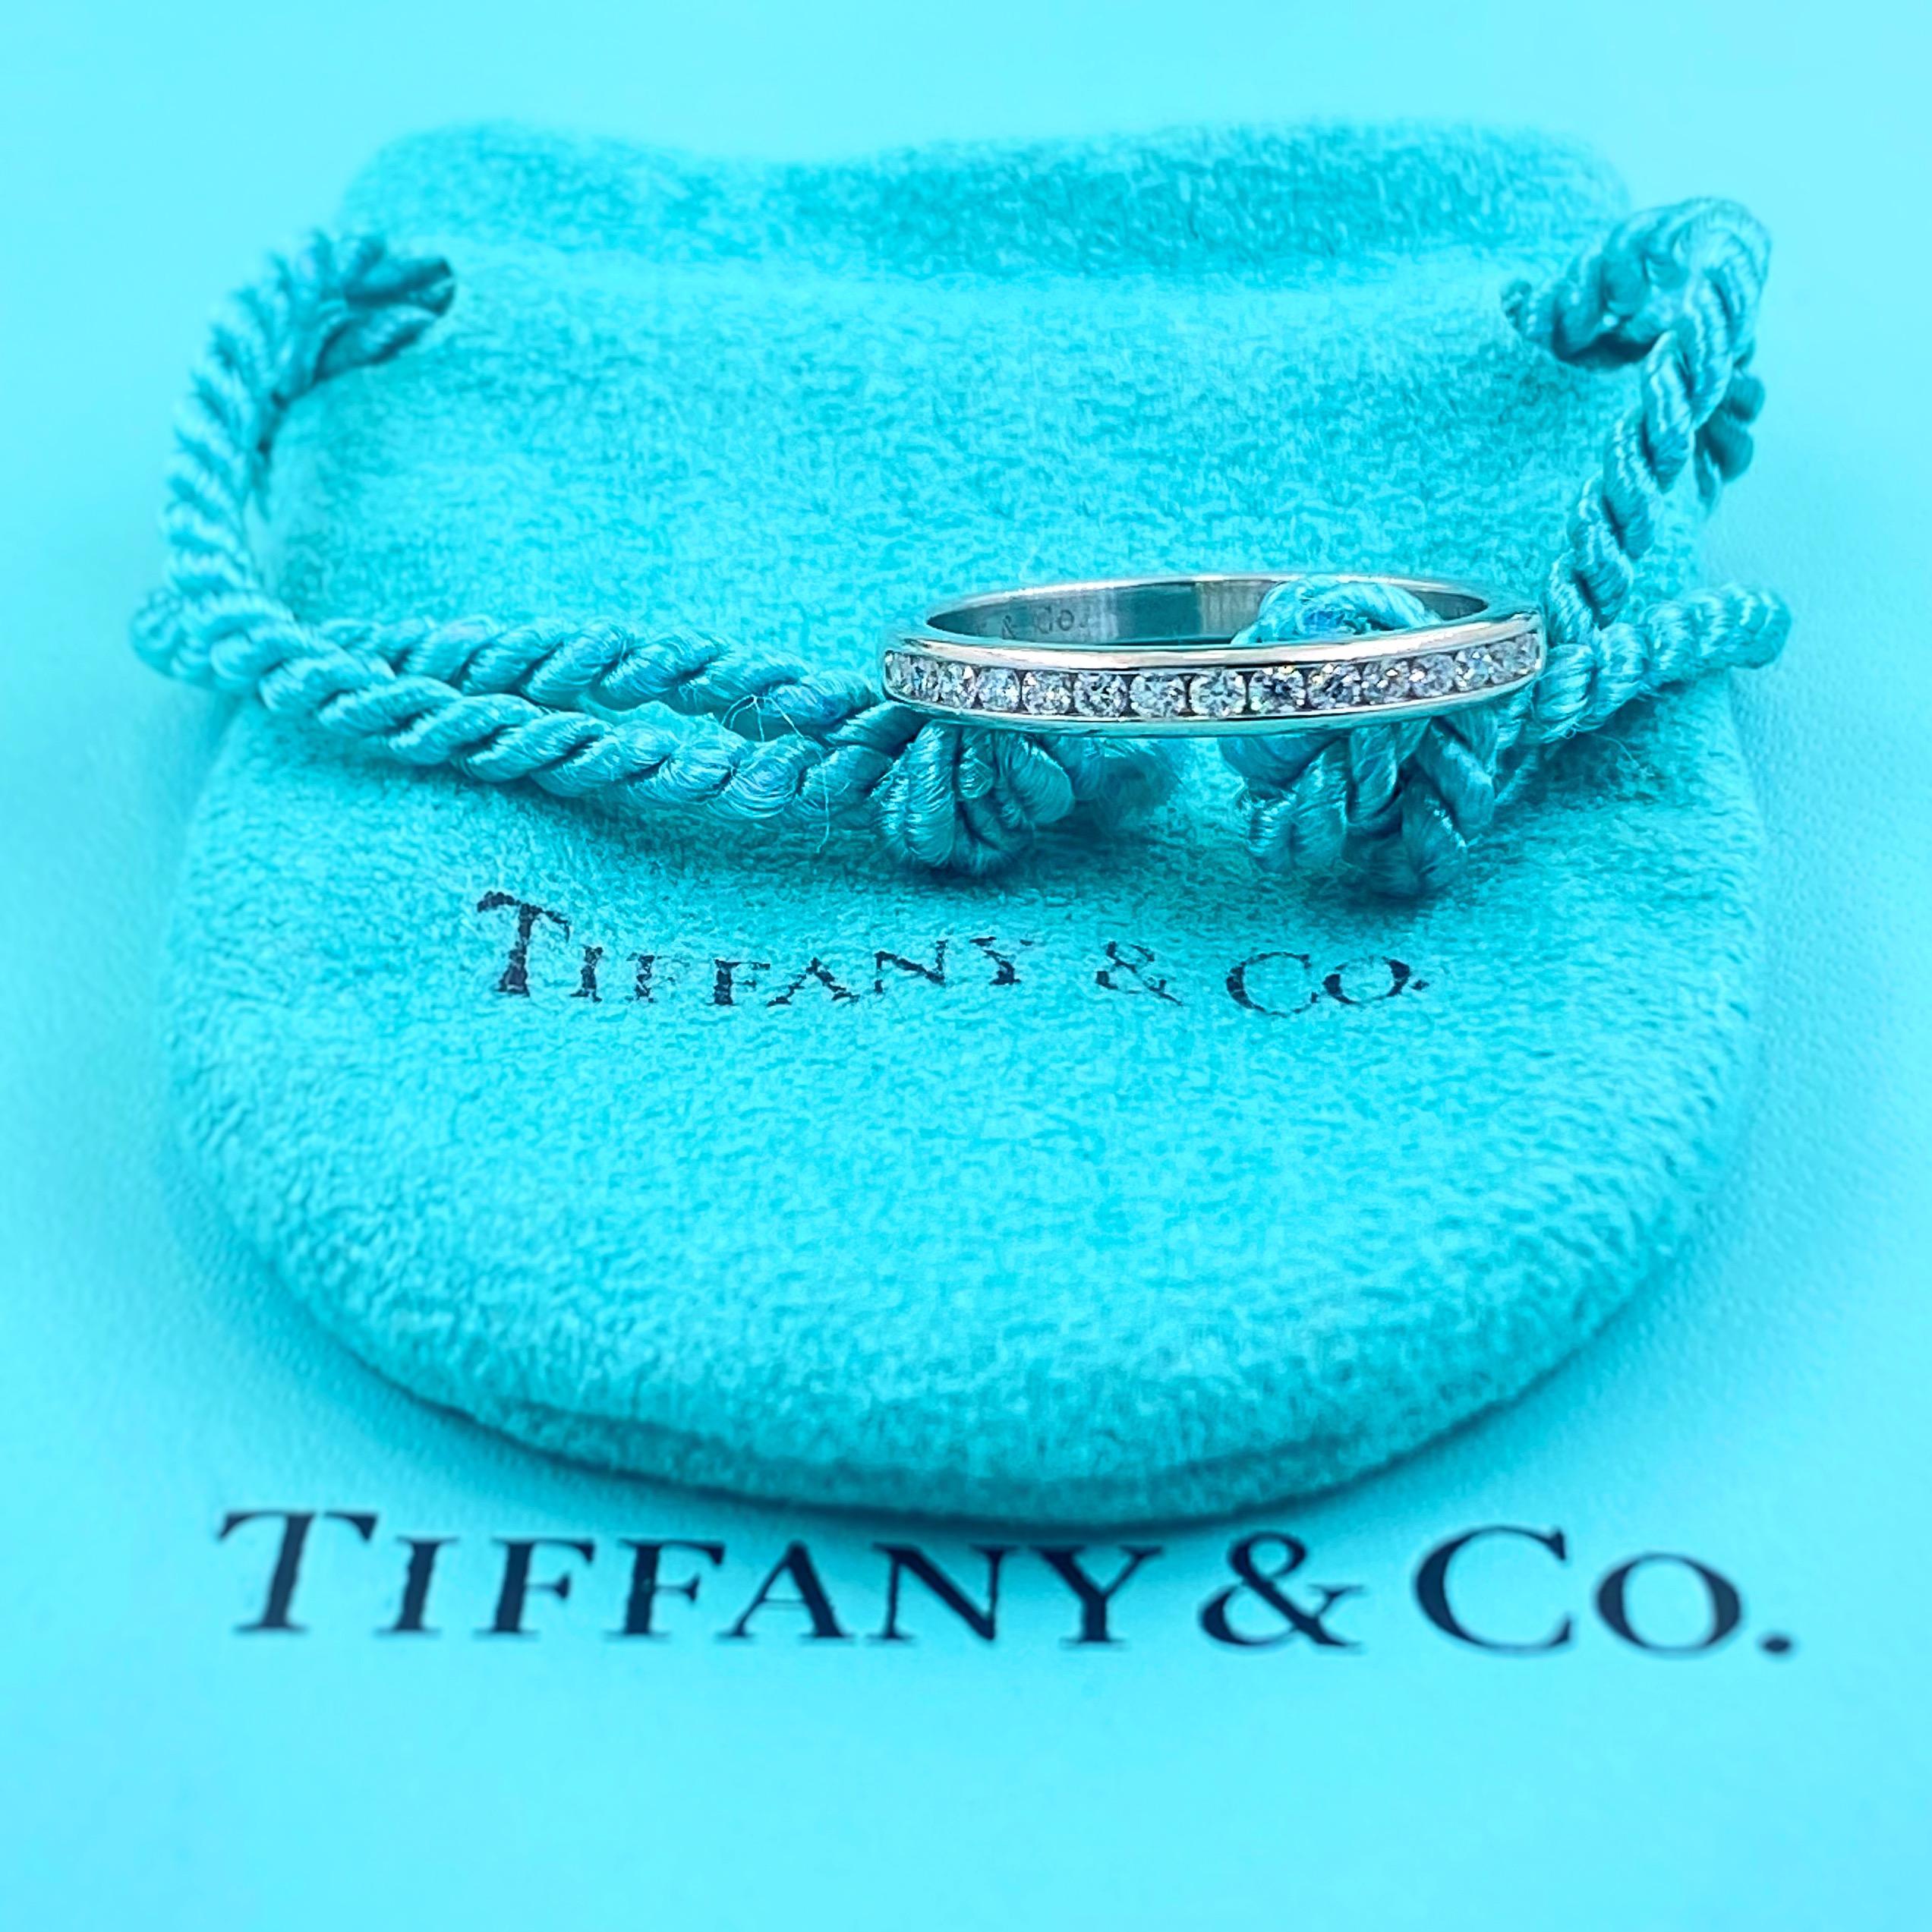 Tiffany & Co. Diamond Wedding Band
Style:  Half-Circle Channel-Set 
Metal:  Platinum PT950
Size / Measurements:  2.5 MM Width / 6.75 - sizable
TCW:  0.24 tcw
Main Diamond:  15 Round Brilliant Diamond
Color & Clarity:  G - VVS
Hallmark:  ©TIFFANY&CO.